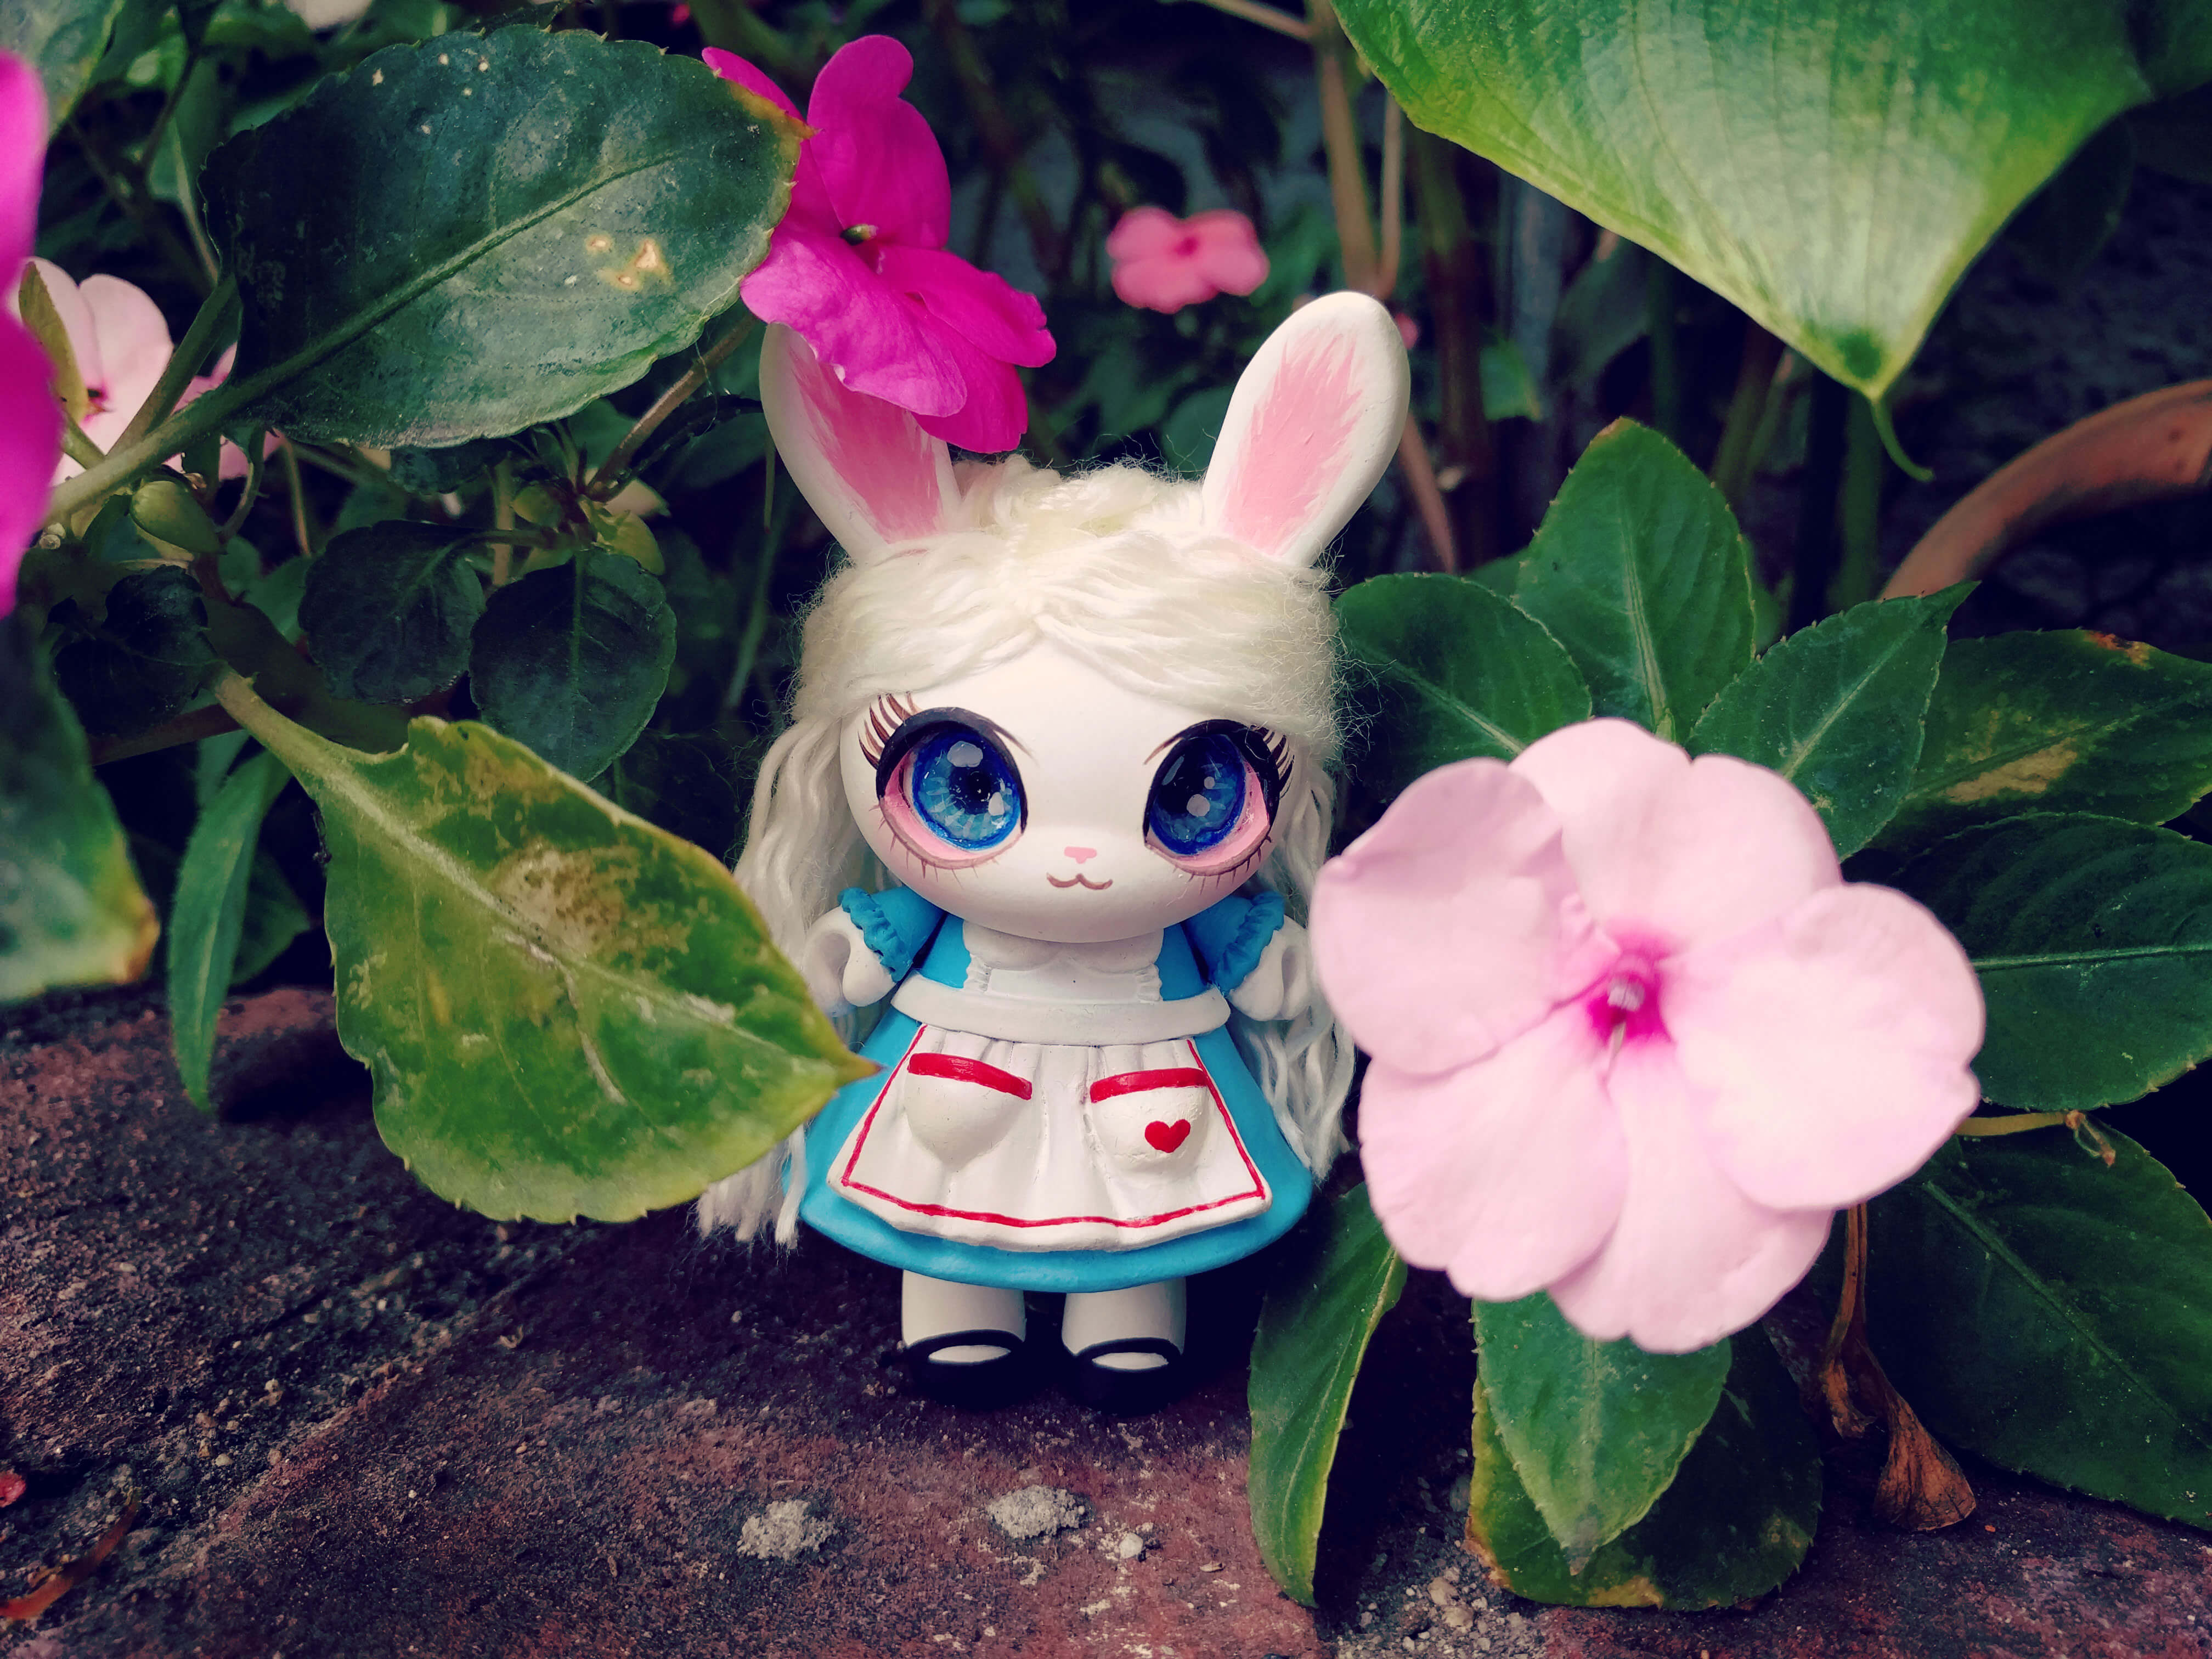 Vote for Alice in Candyland!